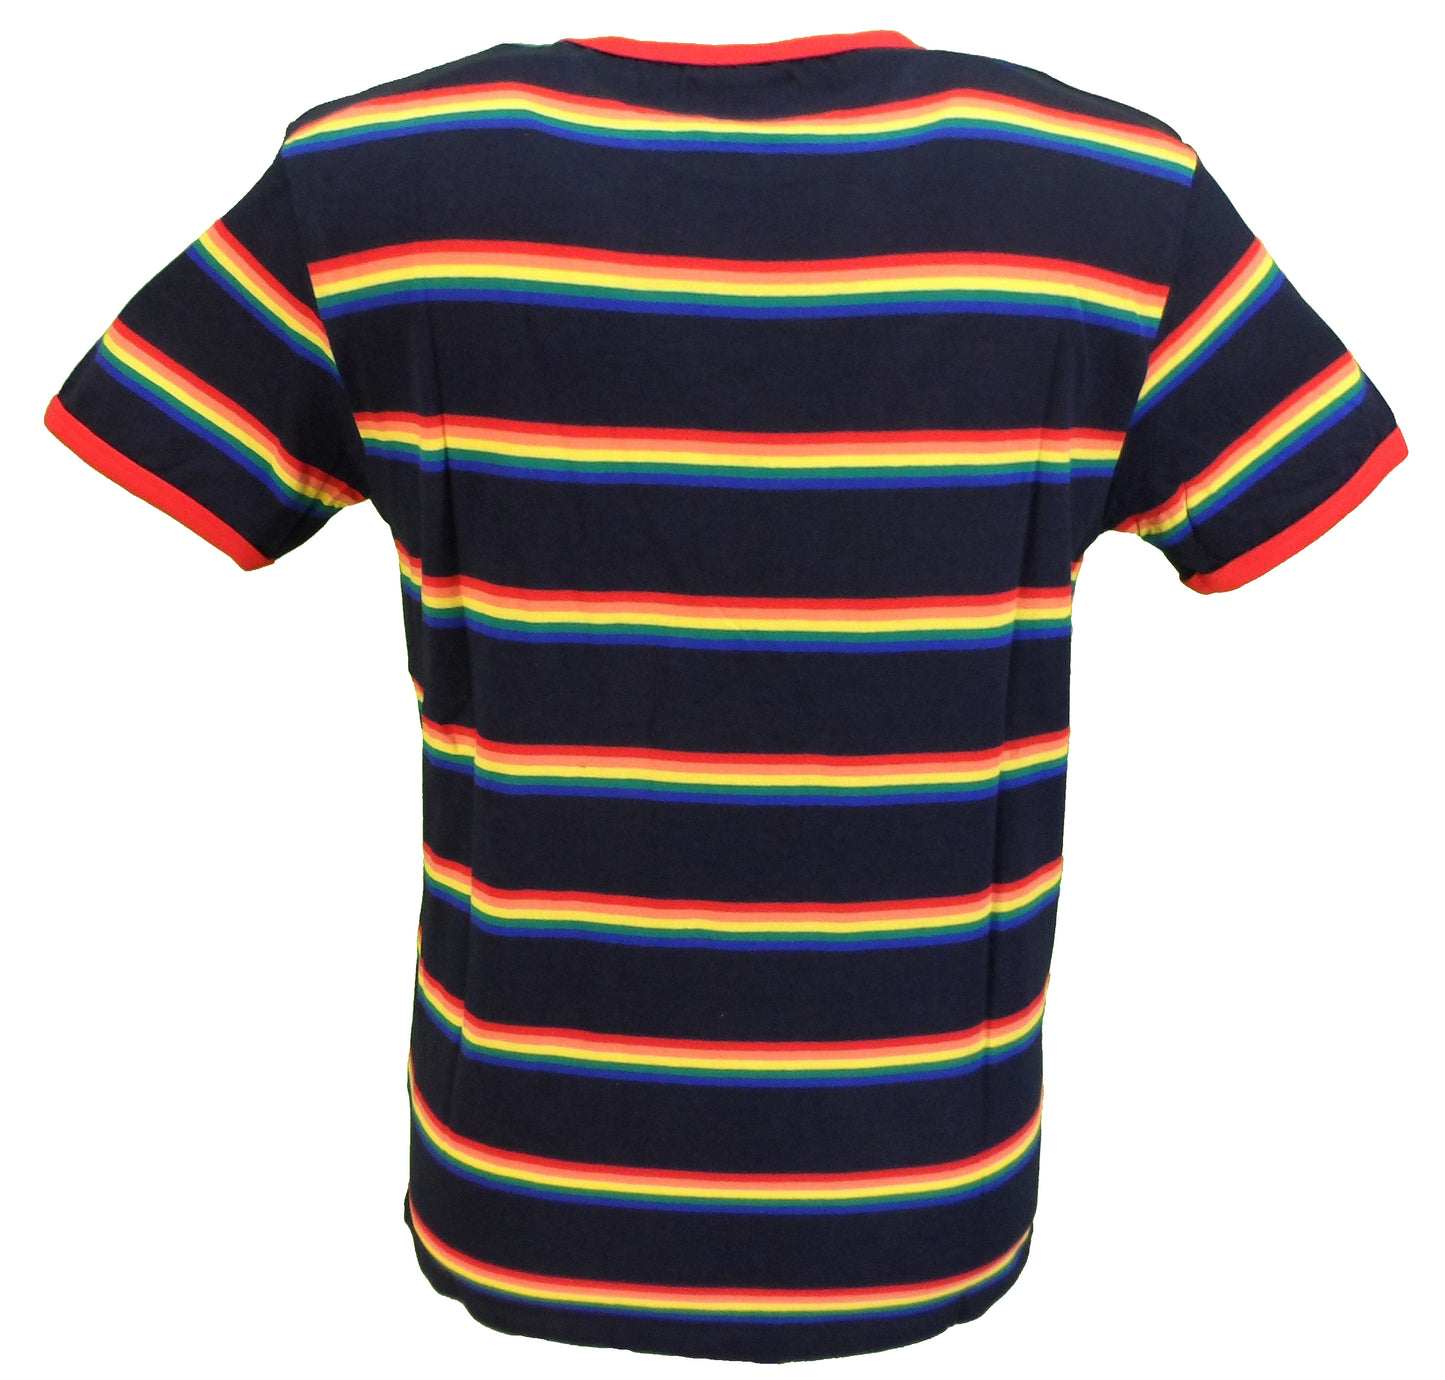 Run & Fly Navy Multi Ringer Rainbow Striped Cotton T Shirt